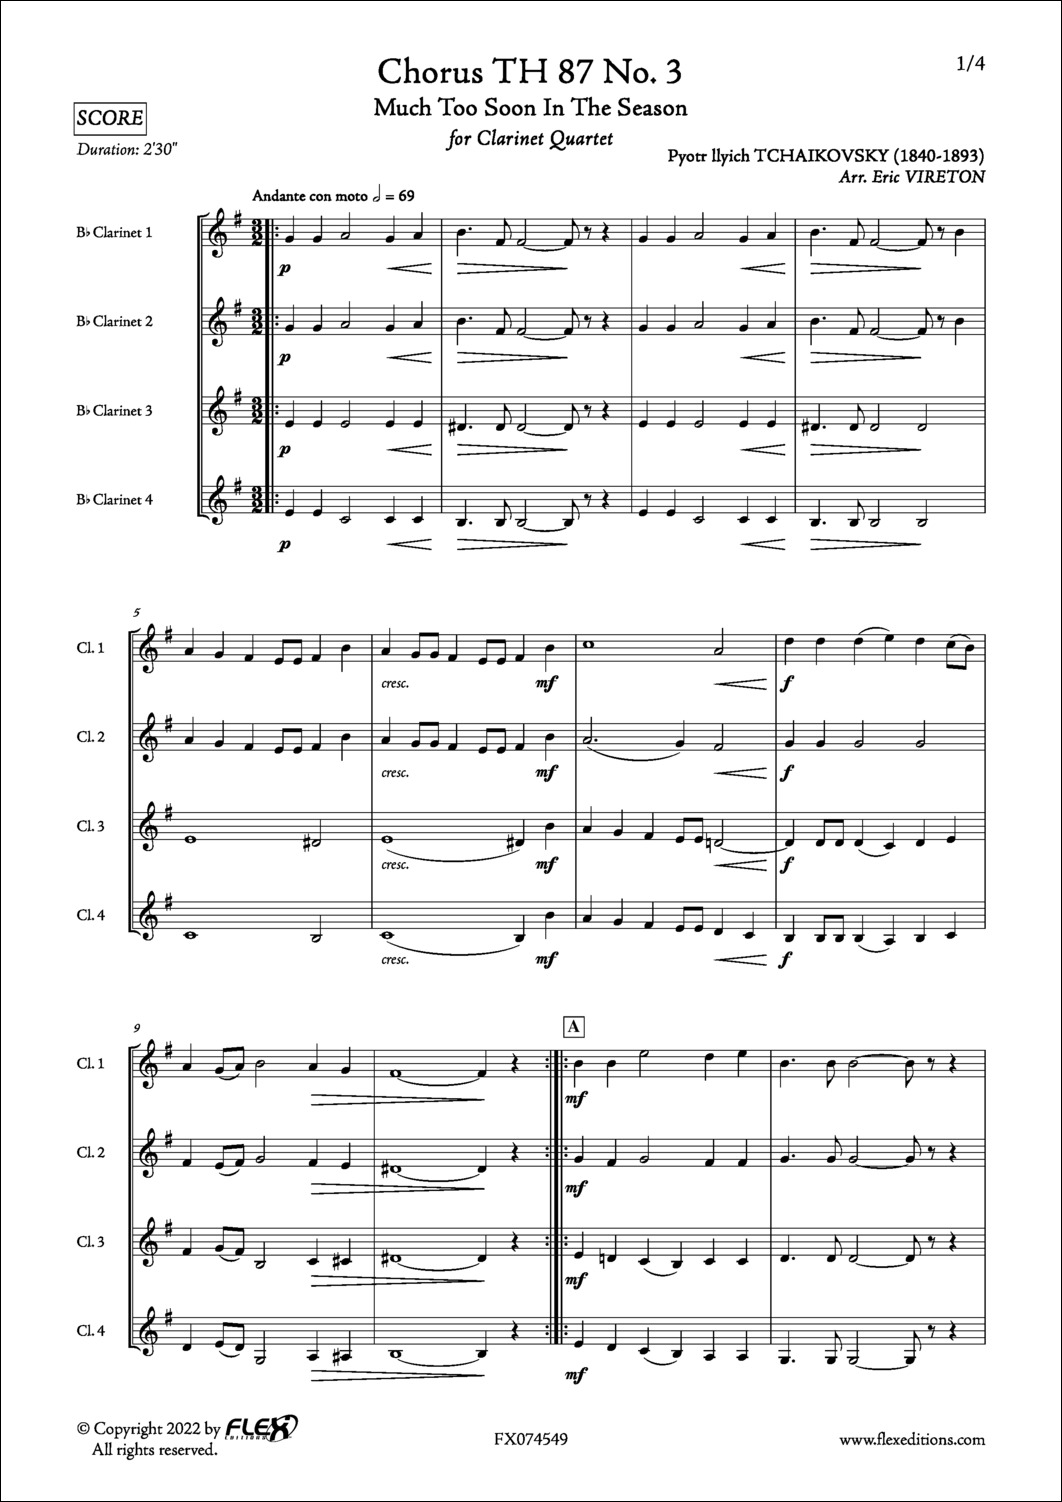 Choeur TH 87 No. 3 - P. I. TCHAIKOVSKY - <font color=#666666>Quatuor de Clarinettes</font>